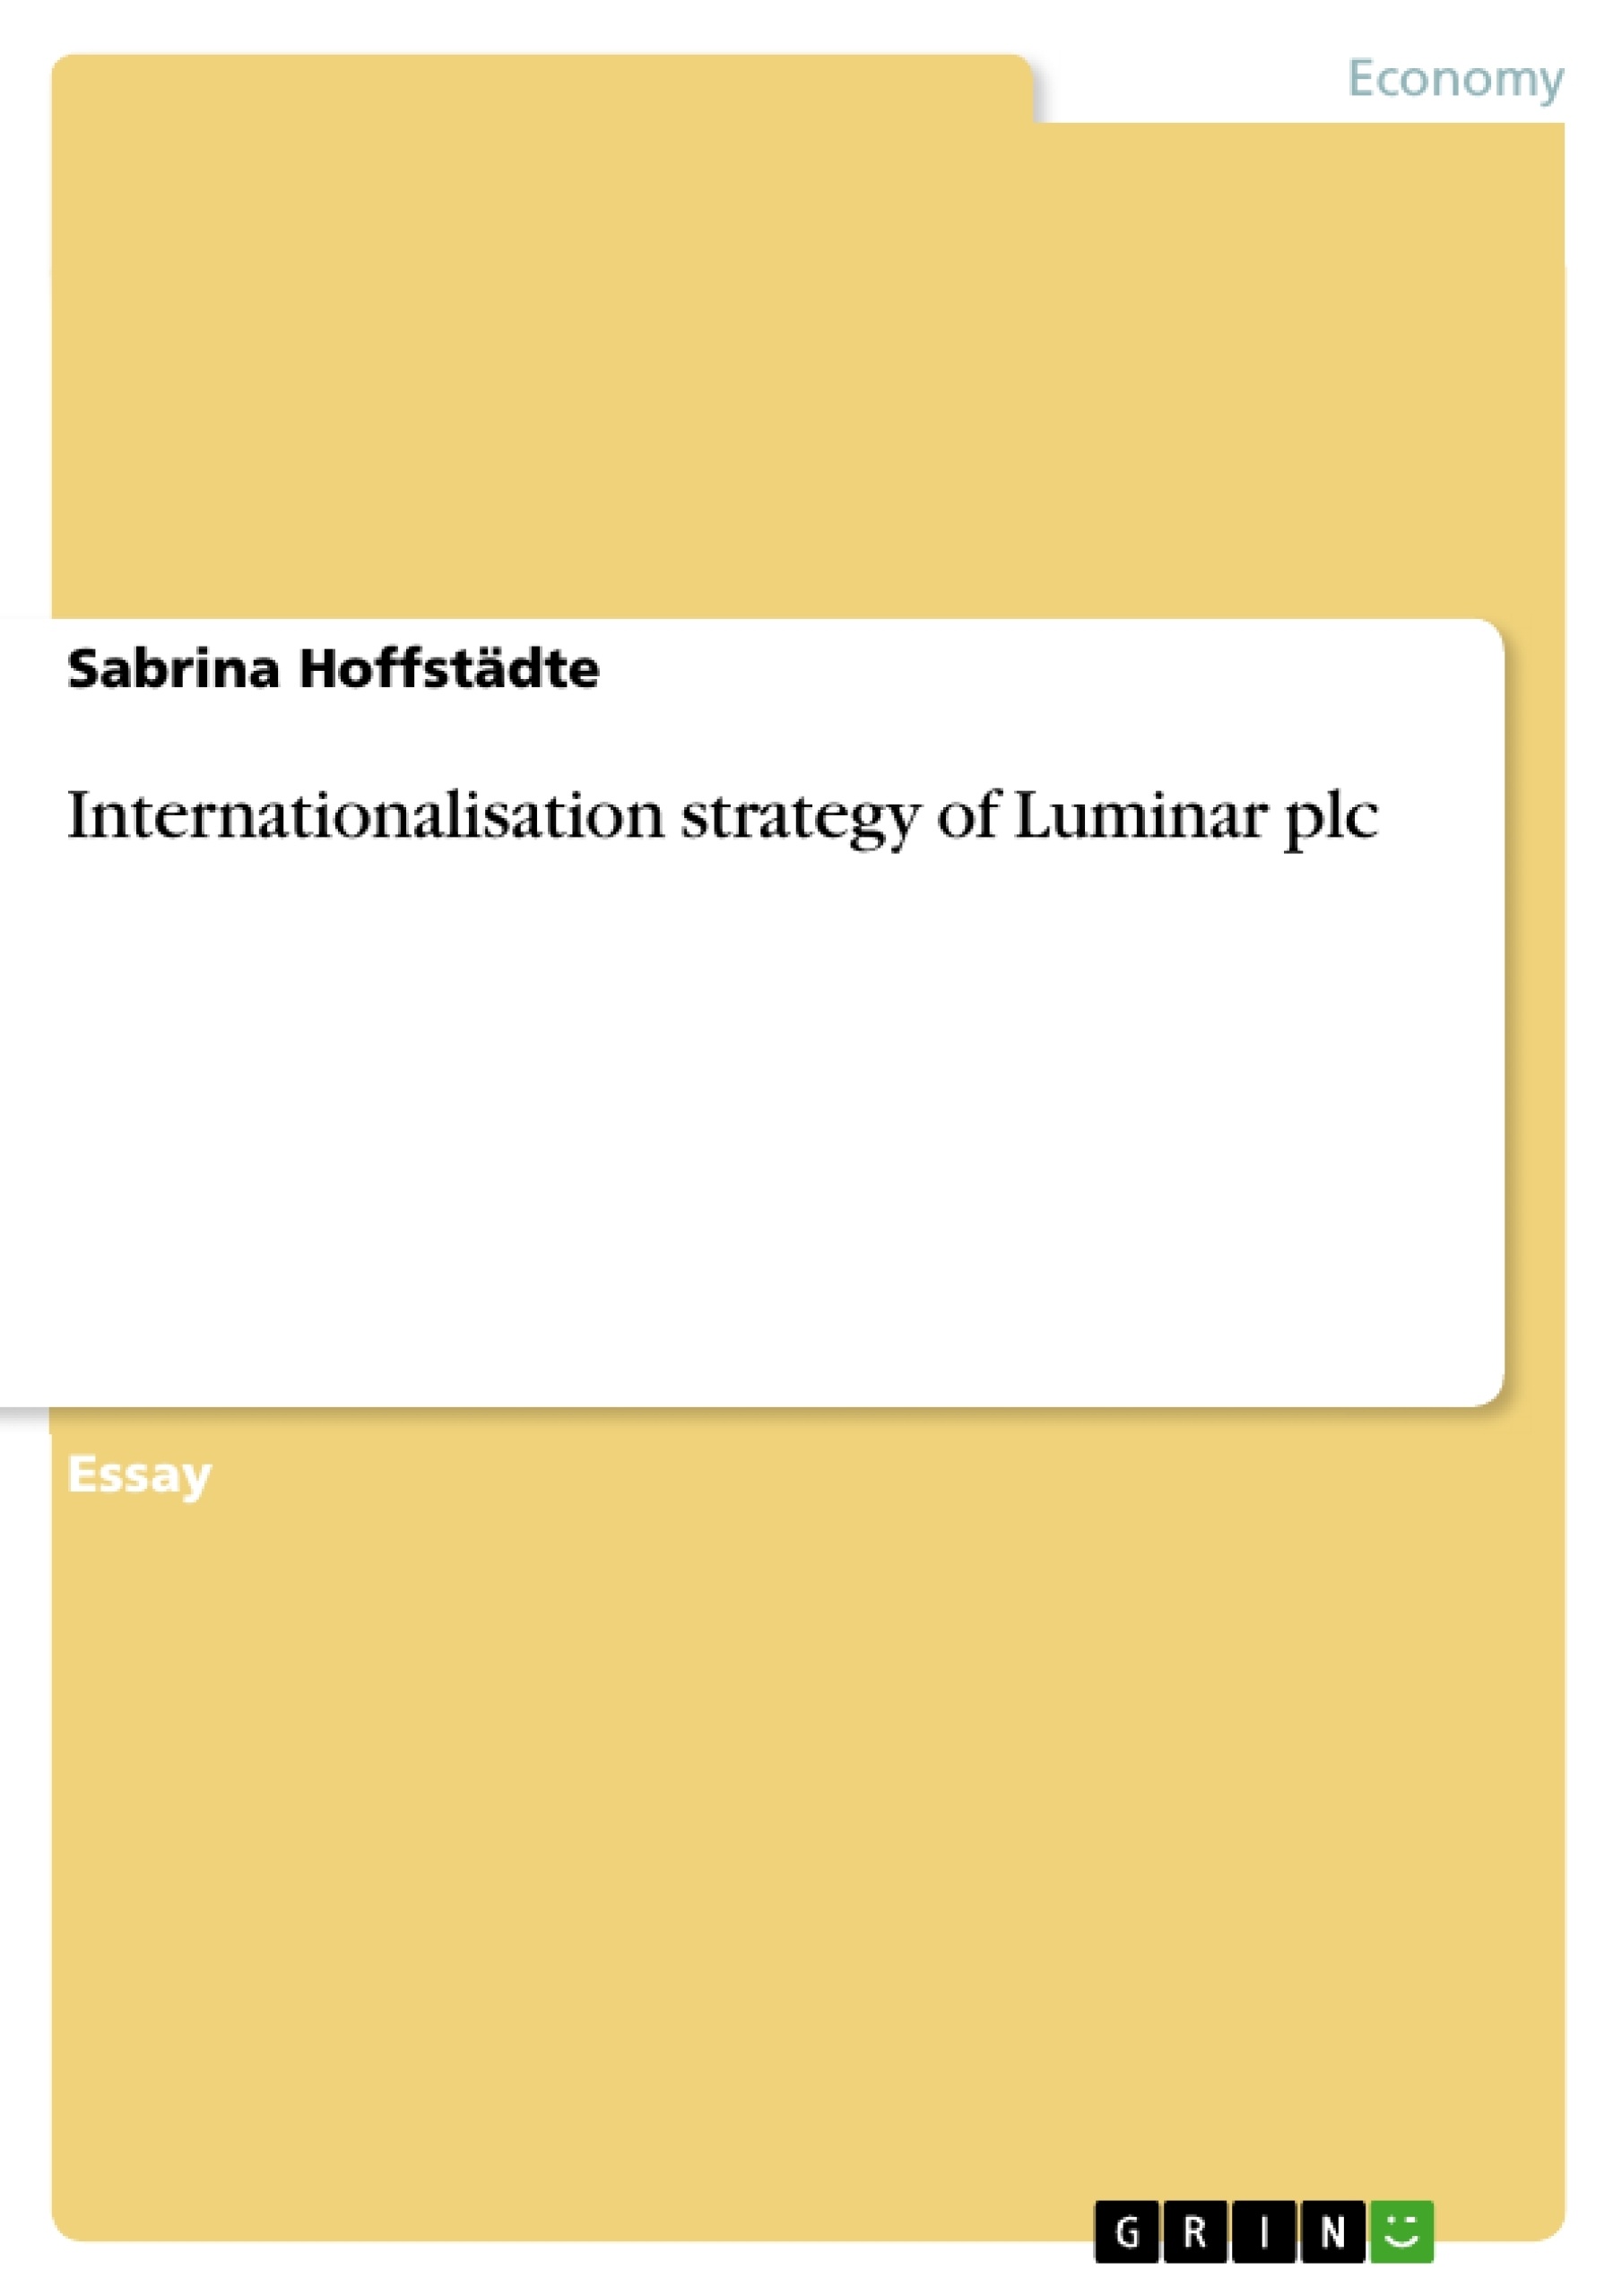 Title: Internationalisation strategy of Luminar plc